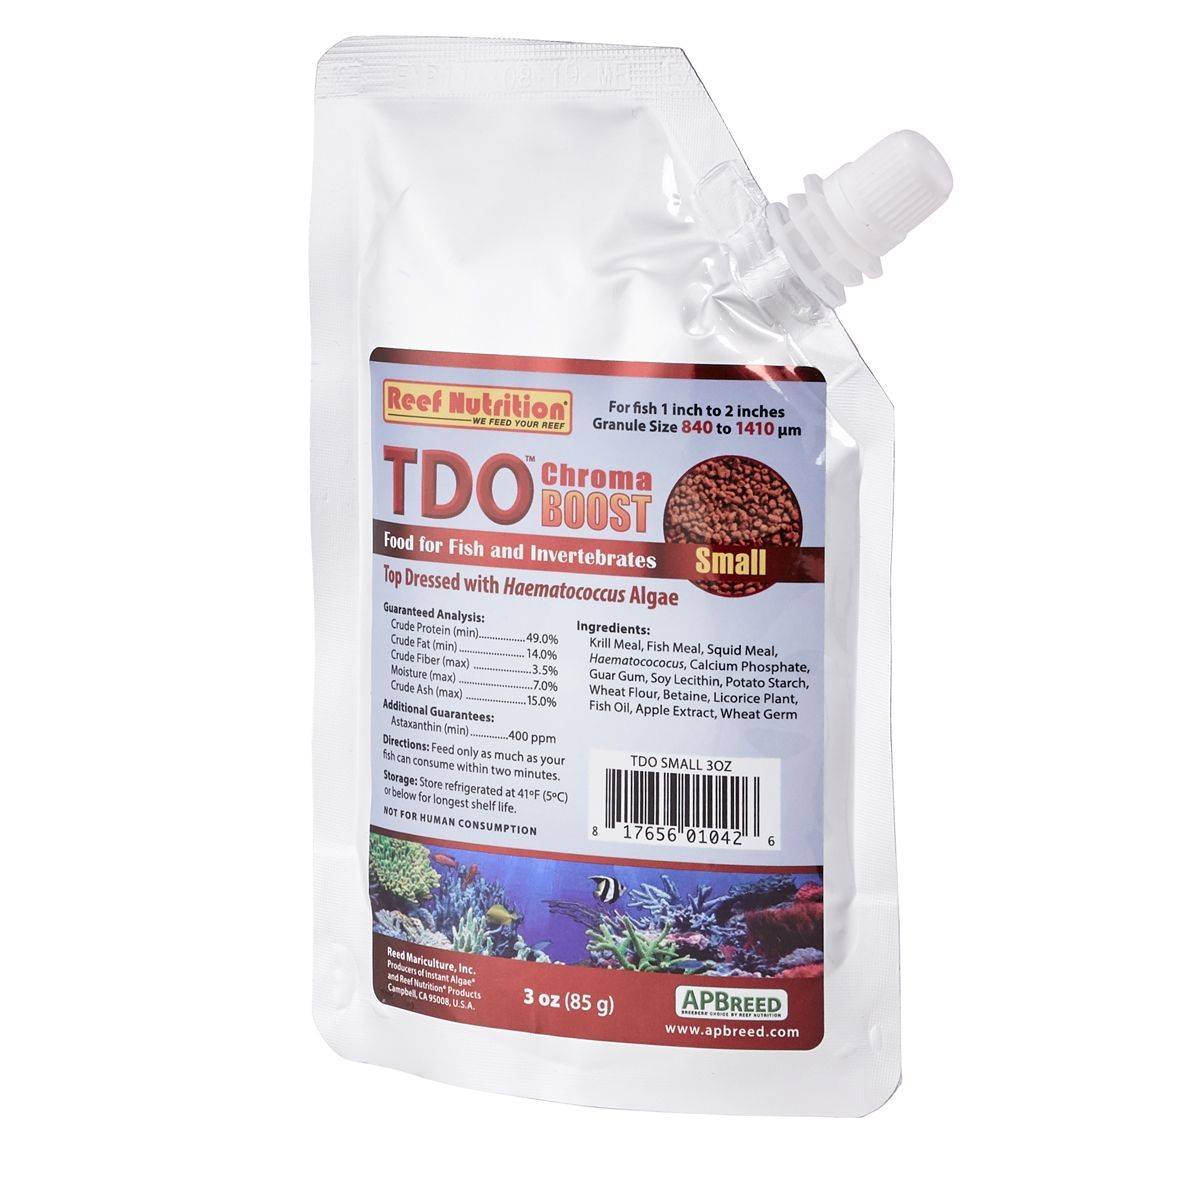 TDO-C2 Chroma BOOST Small Granule Fish Food